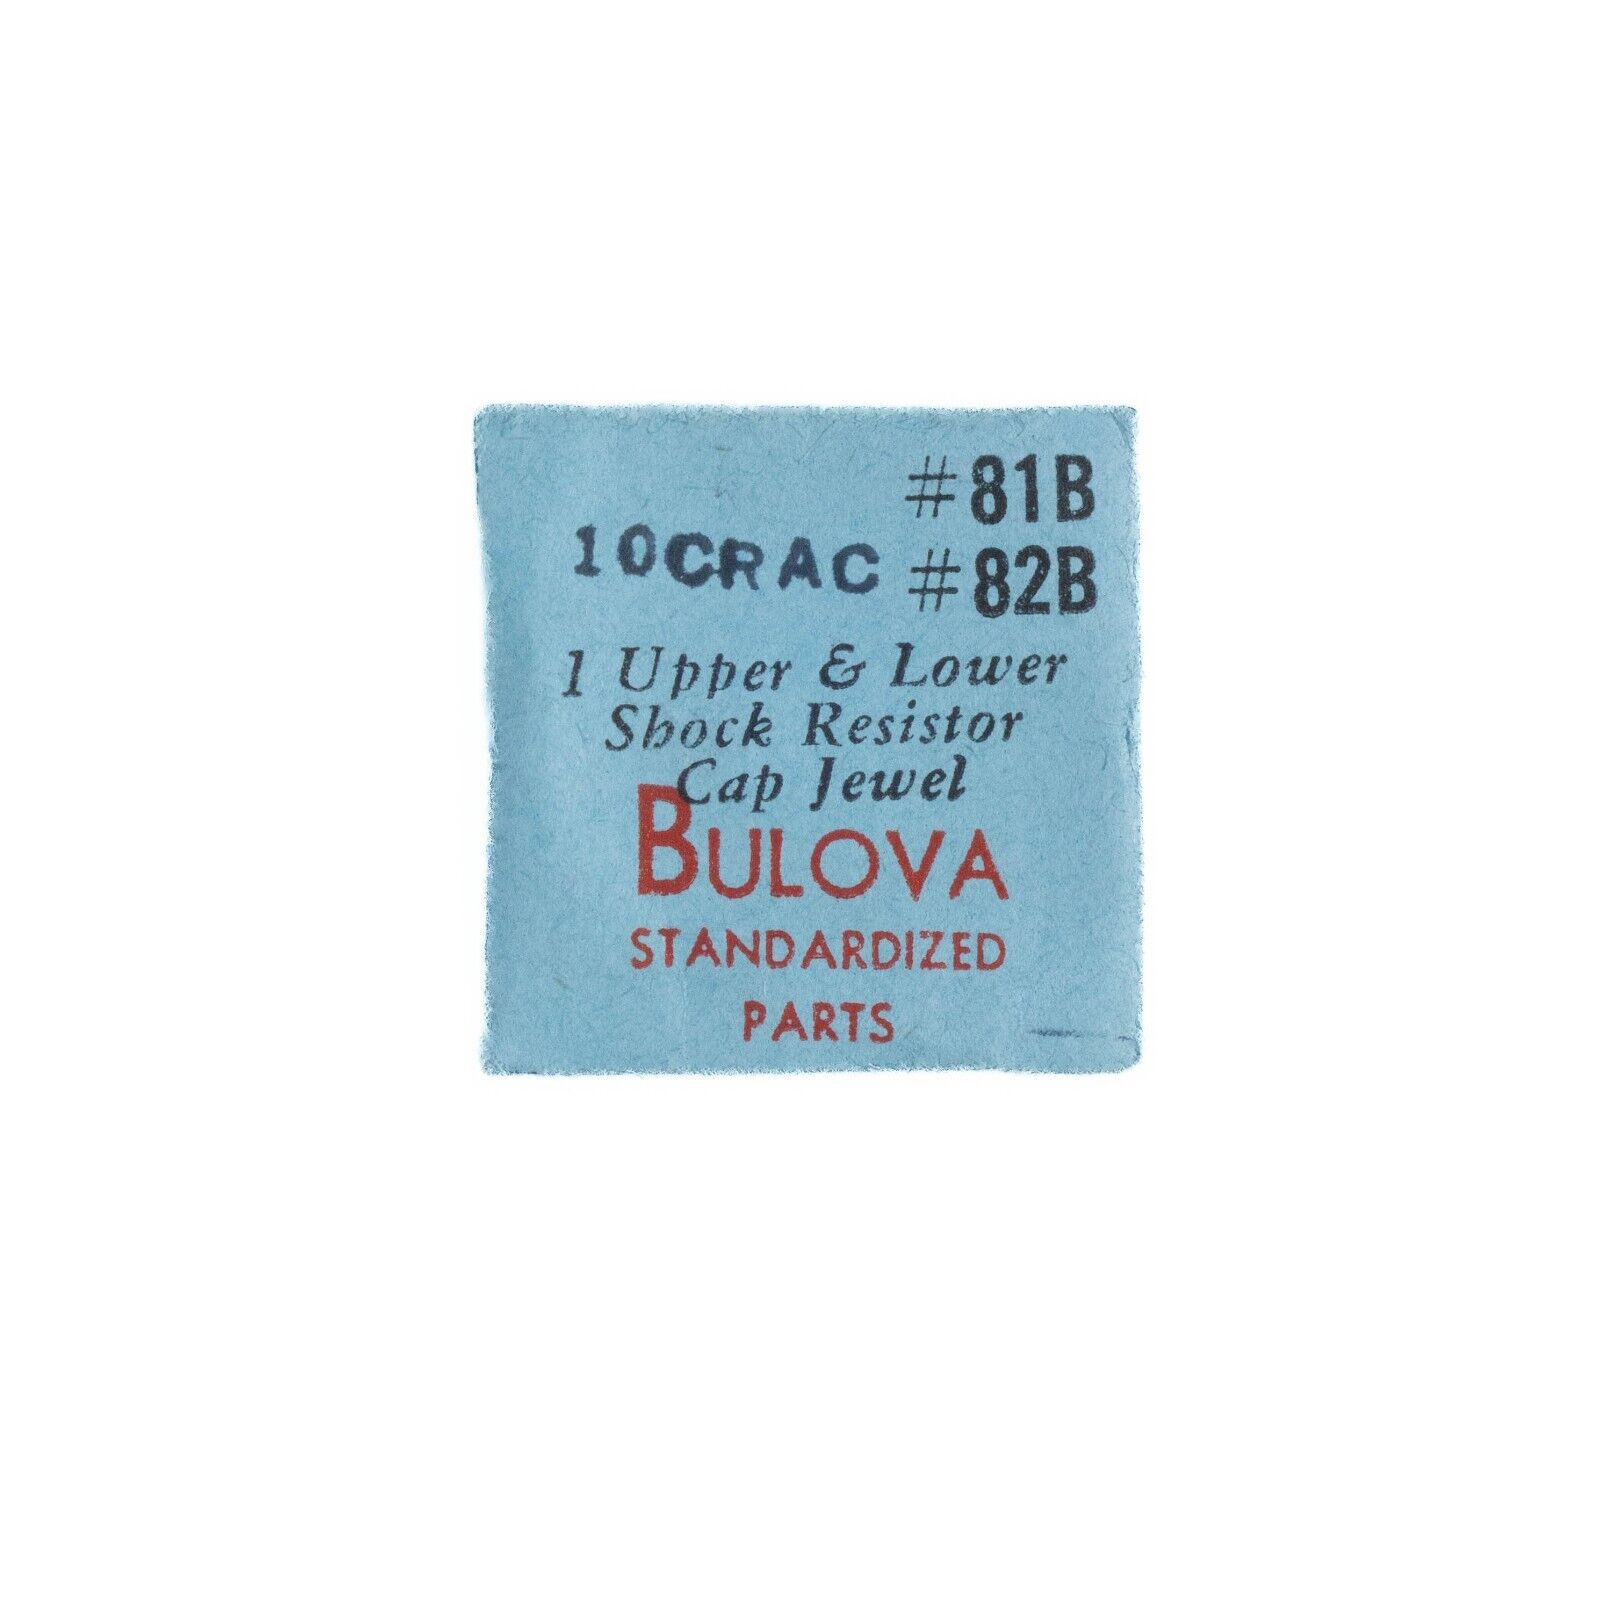 New Old Stock Bulova 10CRAC Upper/Lower Shock Resistor jewel Watch Part #81B-82B Gallery Image 0